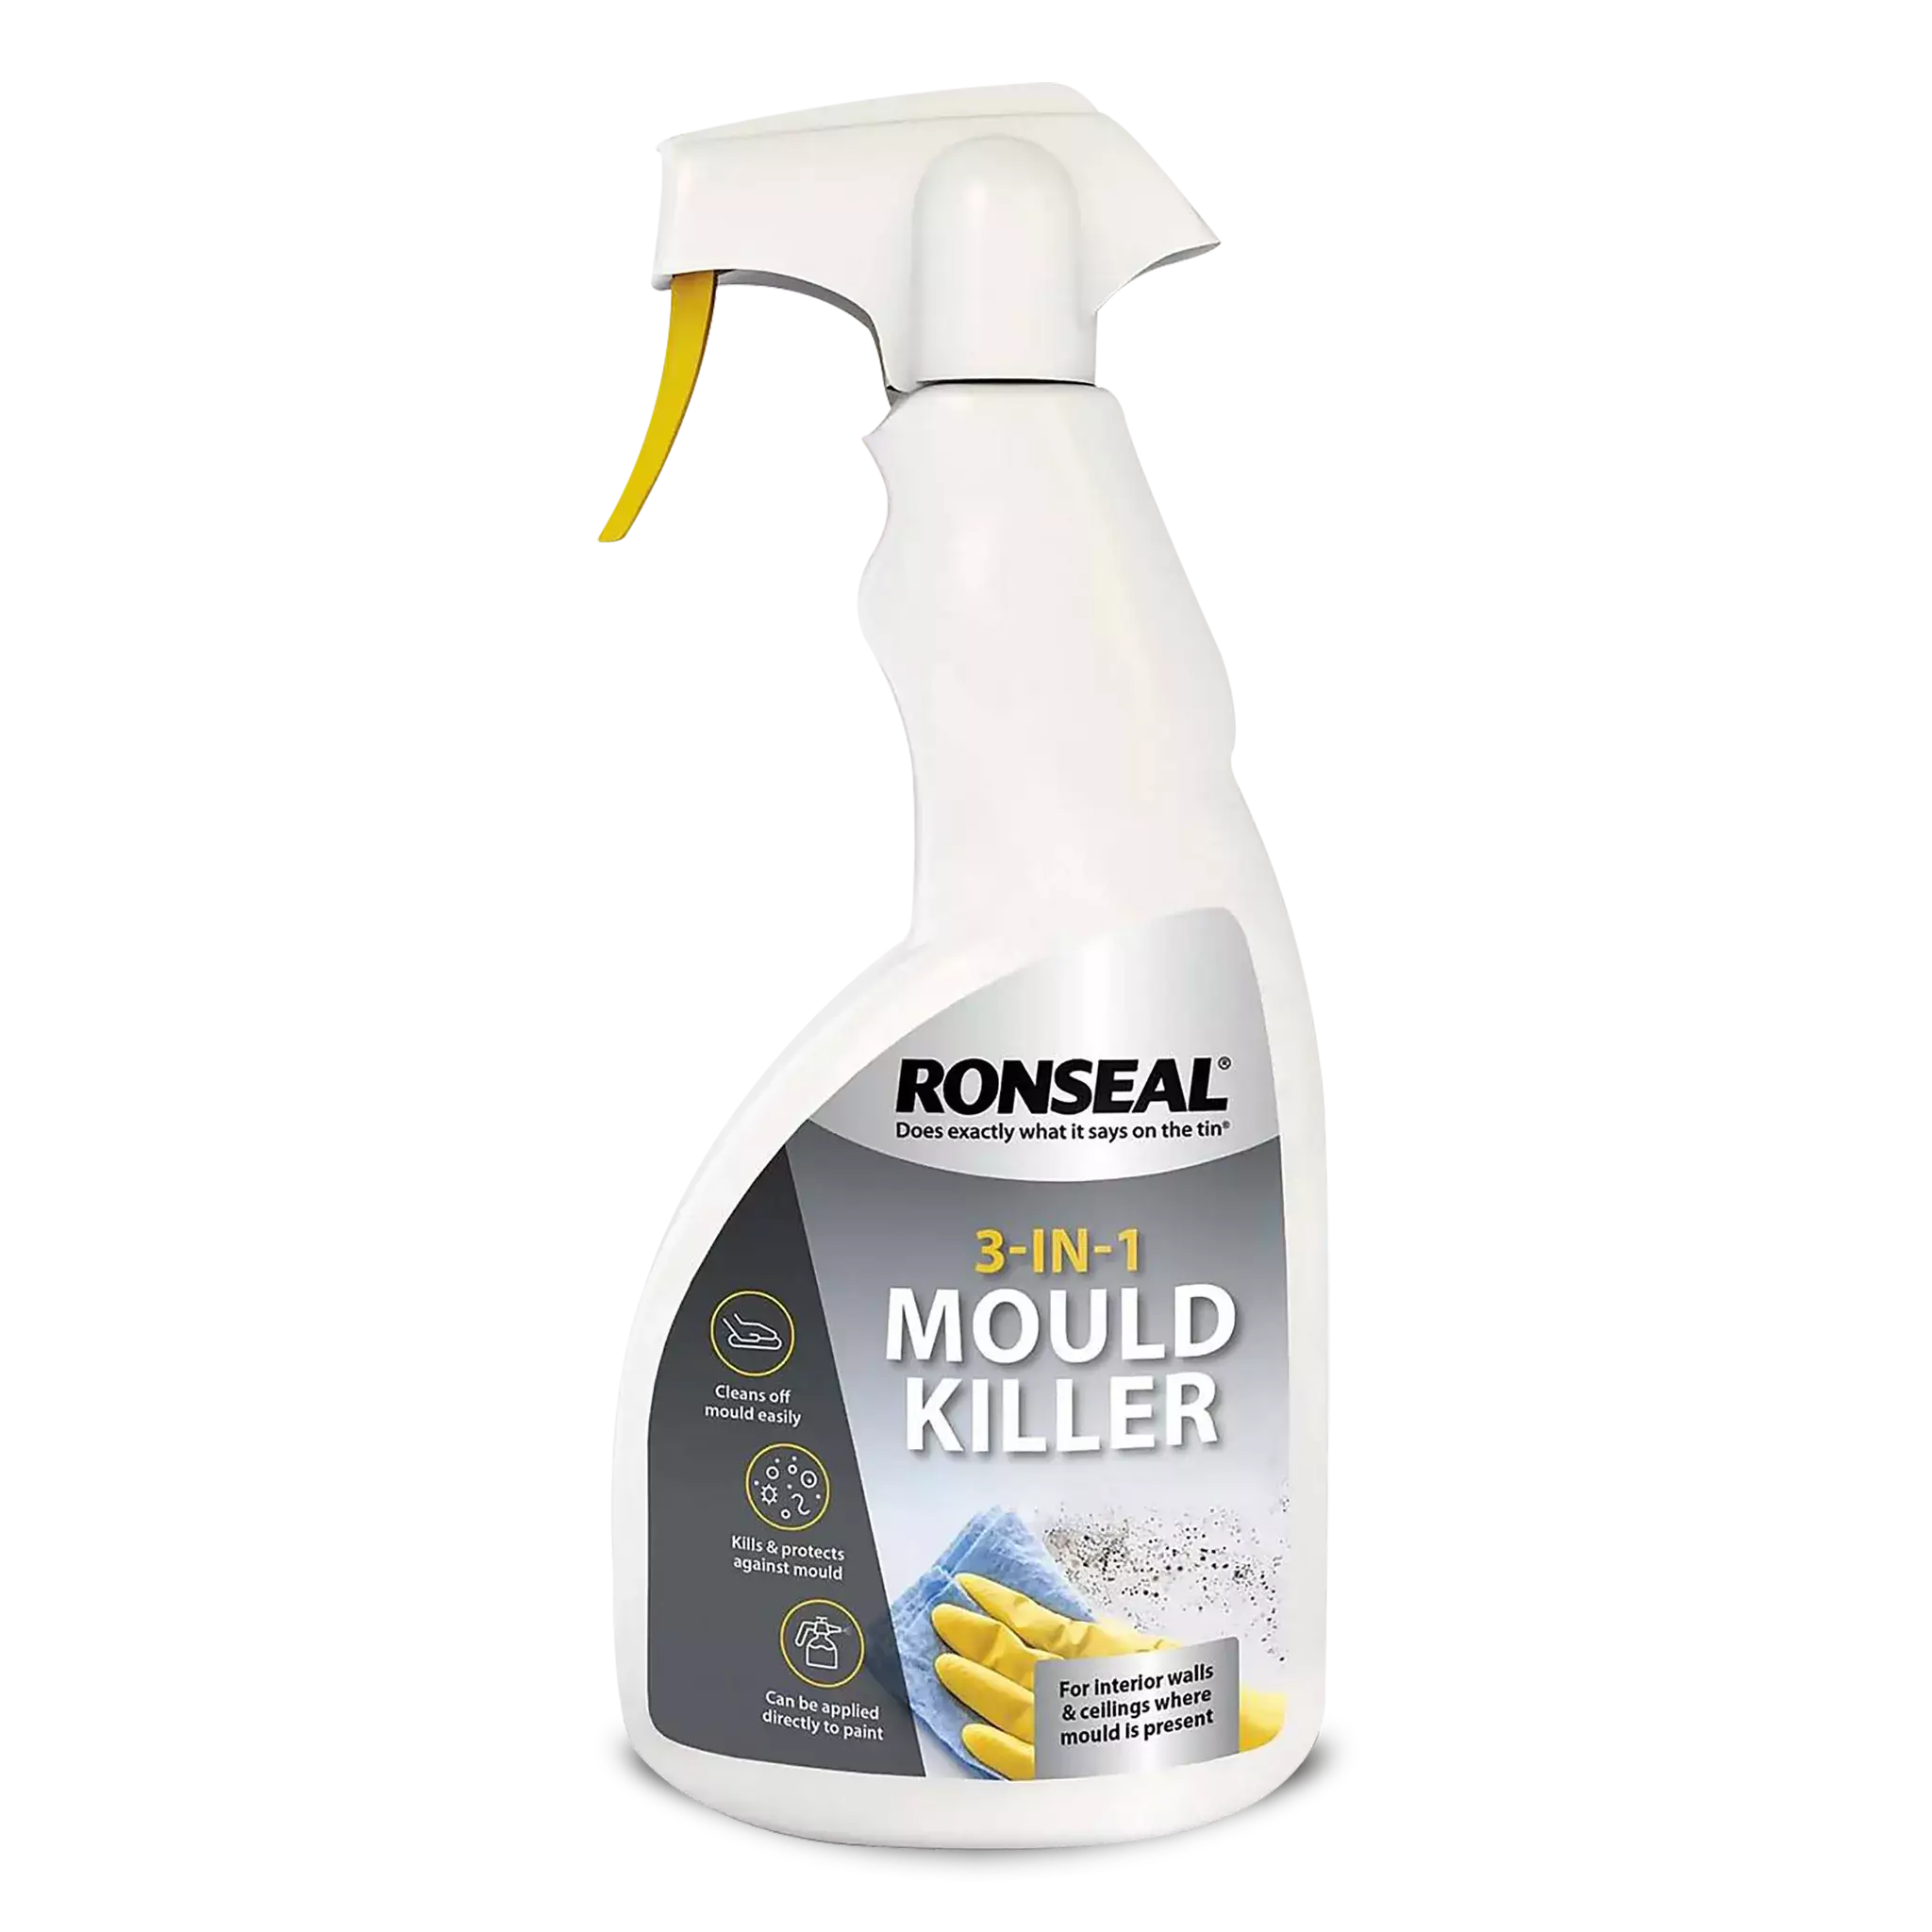 Ronseal 3-in-1 Mould Killer Spray